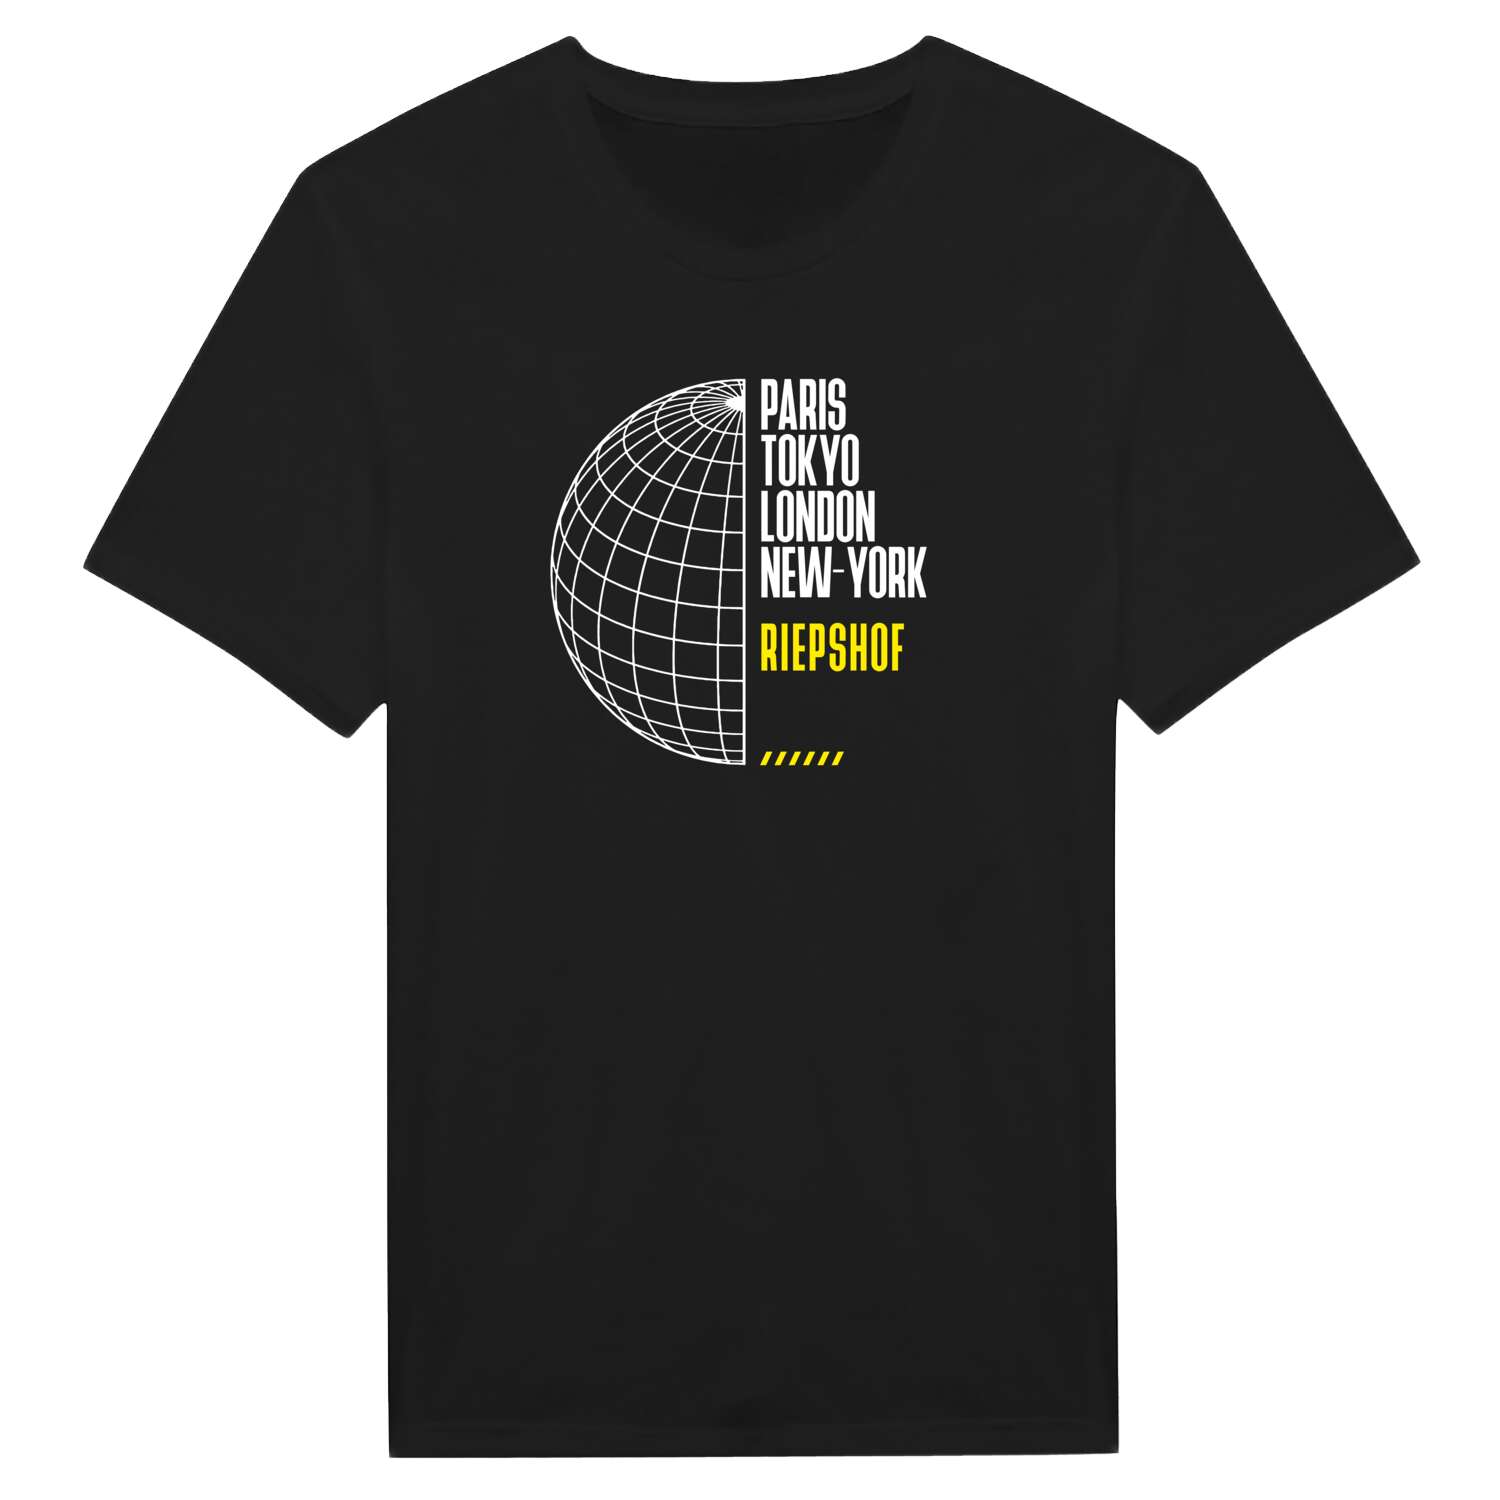 Riepshof T-Shirt »Paris Tokyo London«